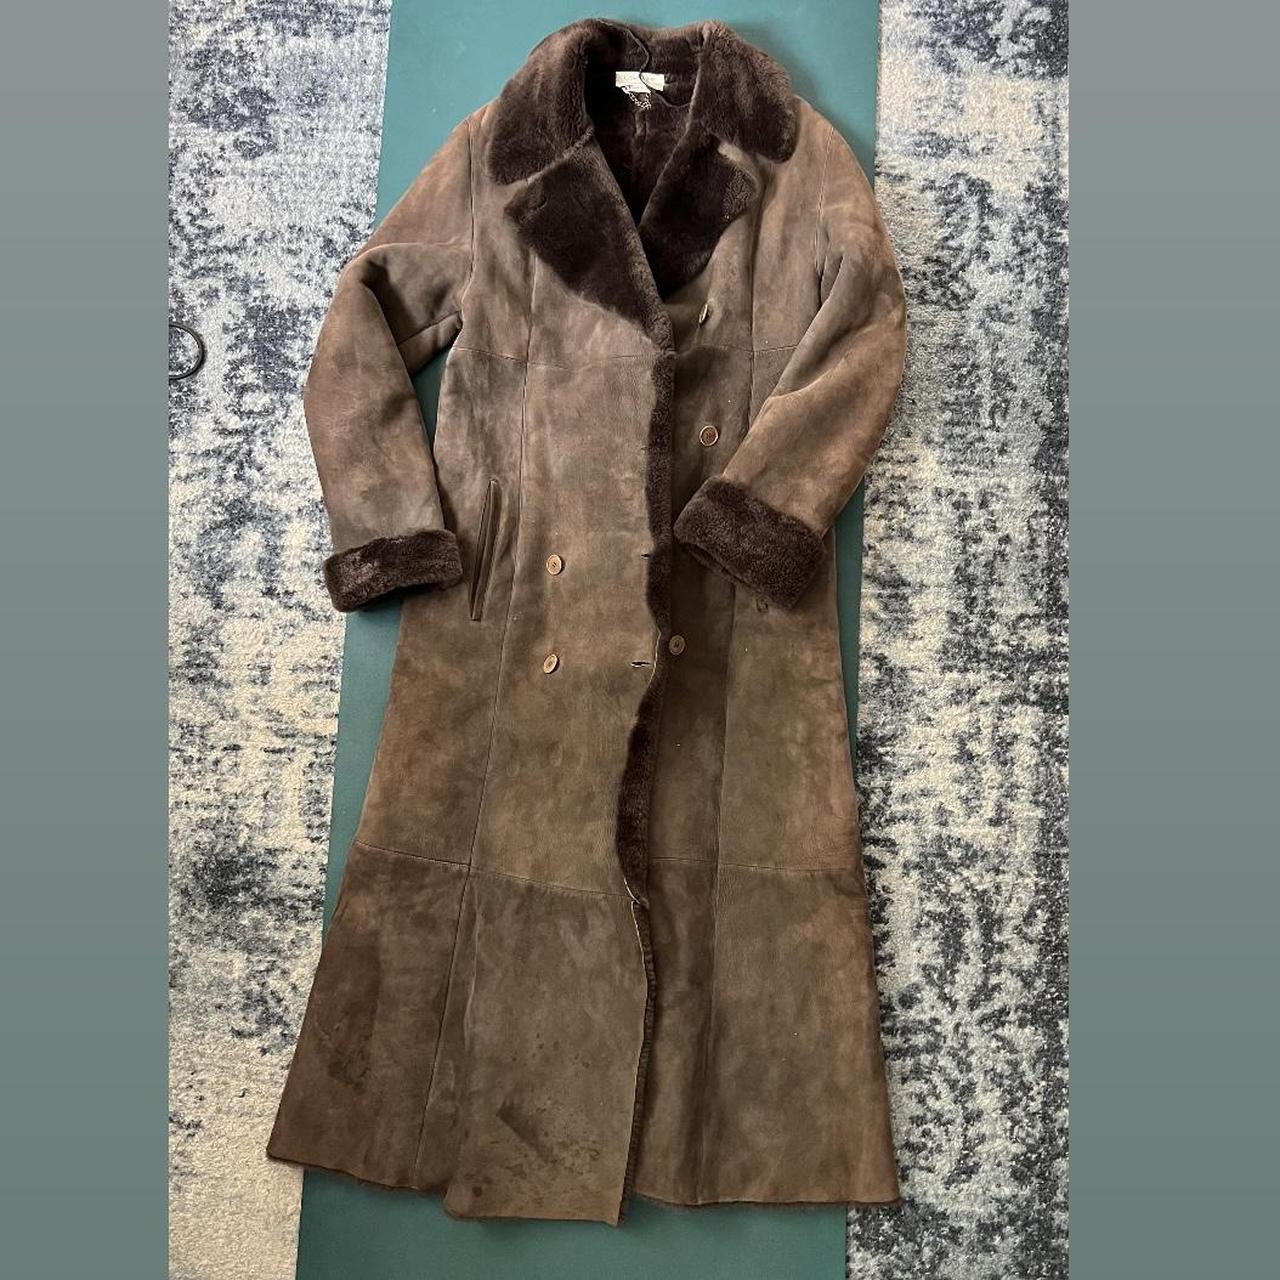 Genuine Shearling full length coat will keep you... - Depop